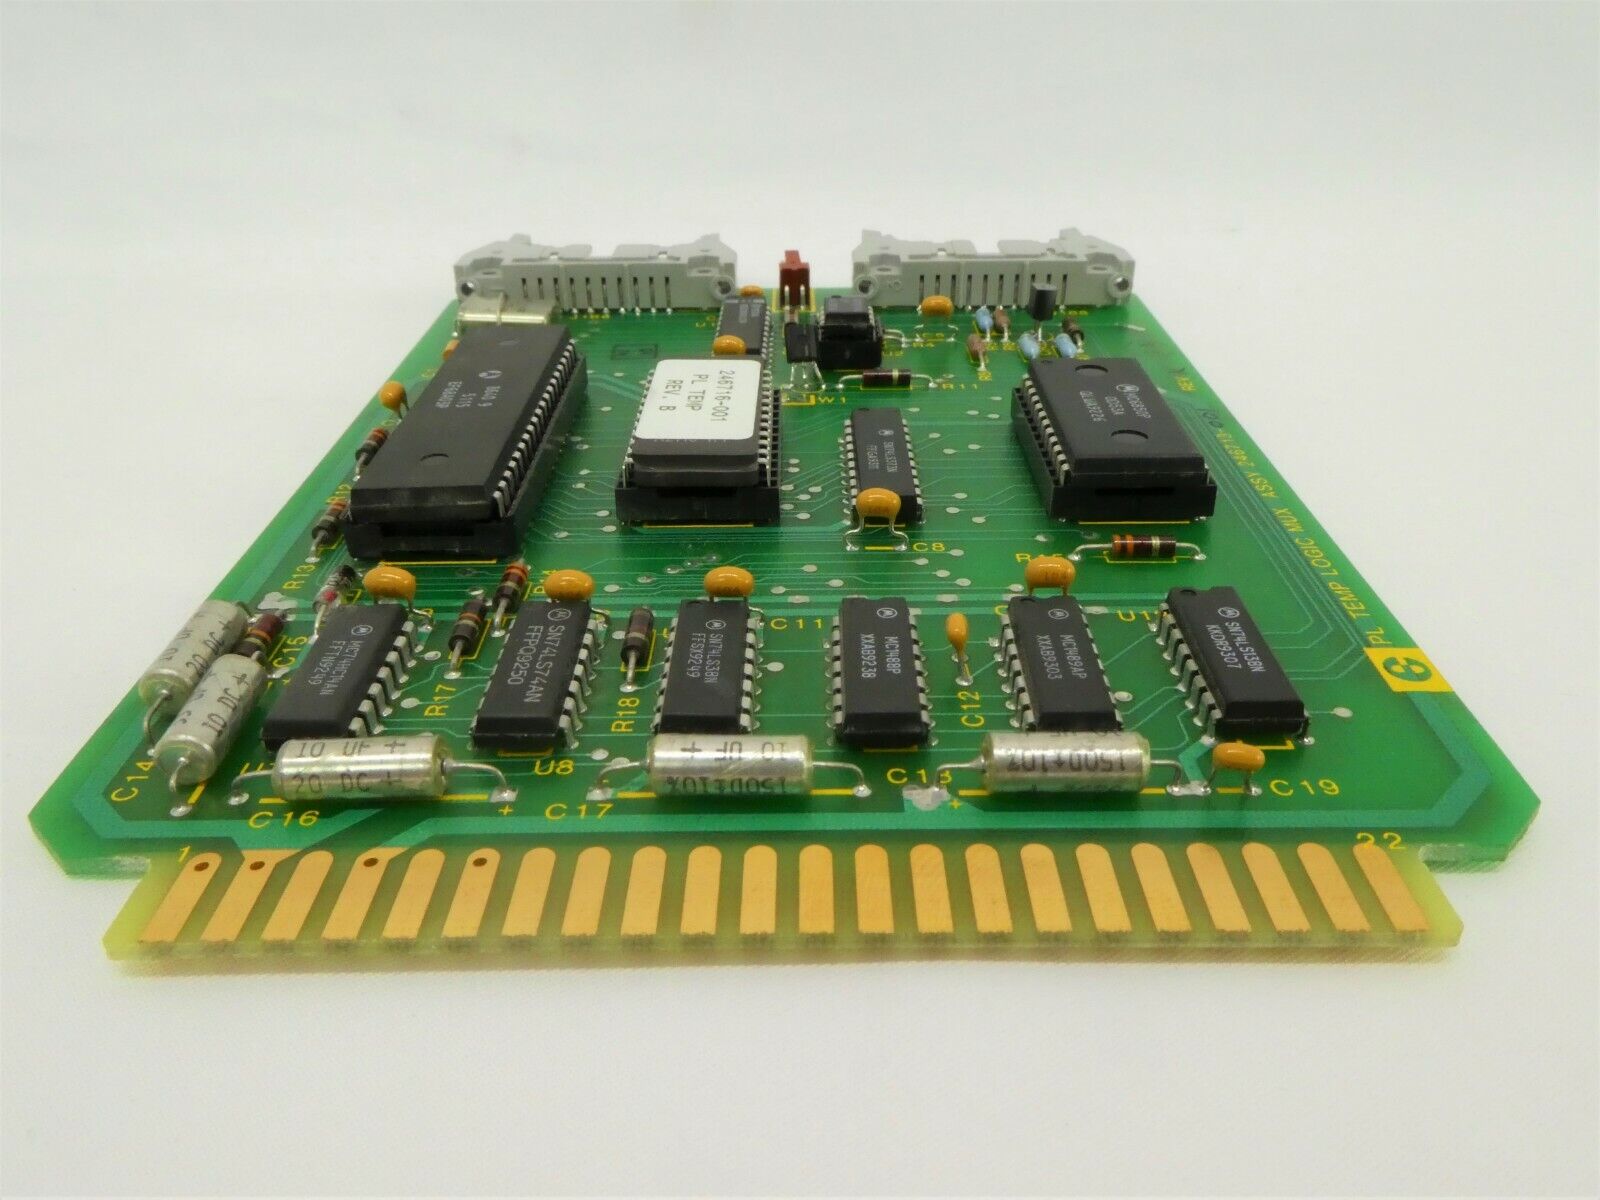 Electroglas 246713-001 PL TEMP Logic Mux Card PCB Rev. K Horizon 4085X Spare